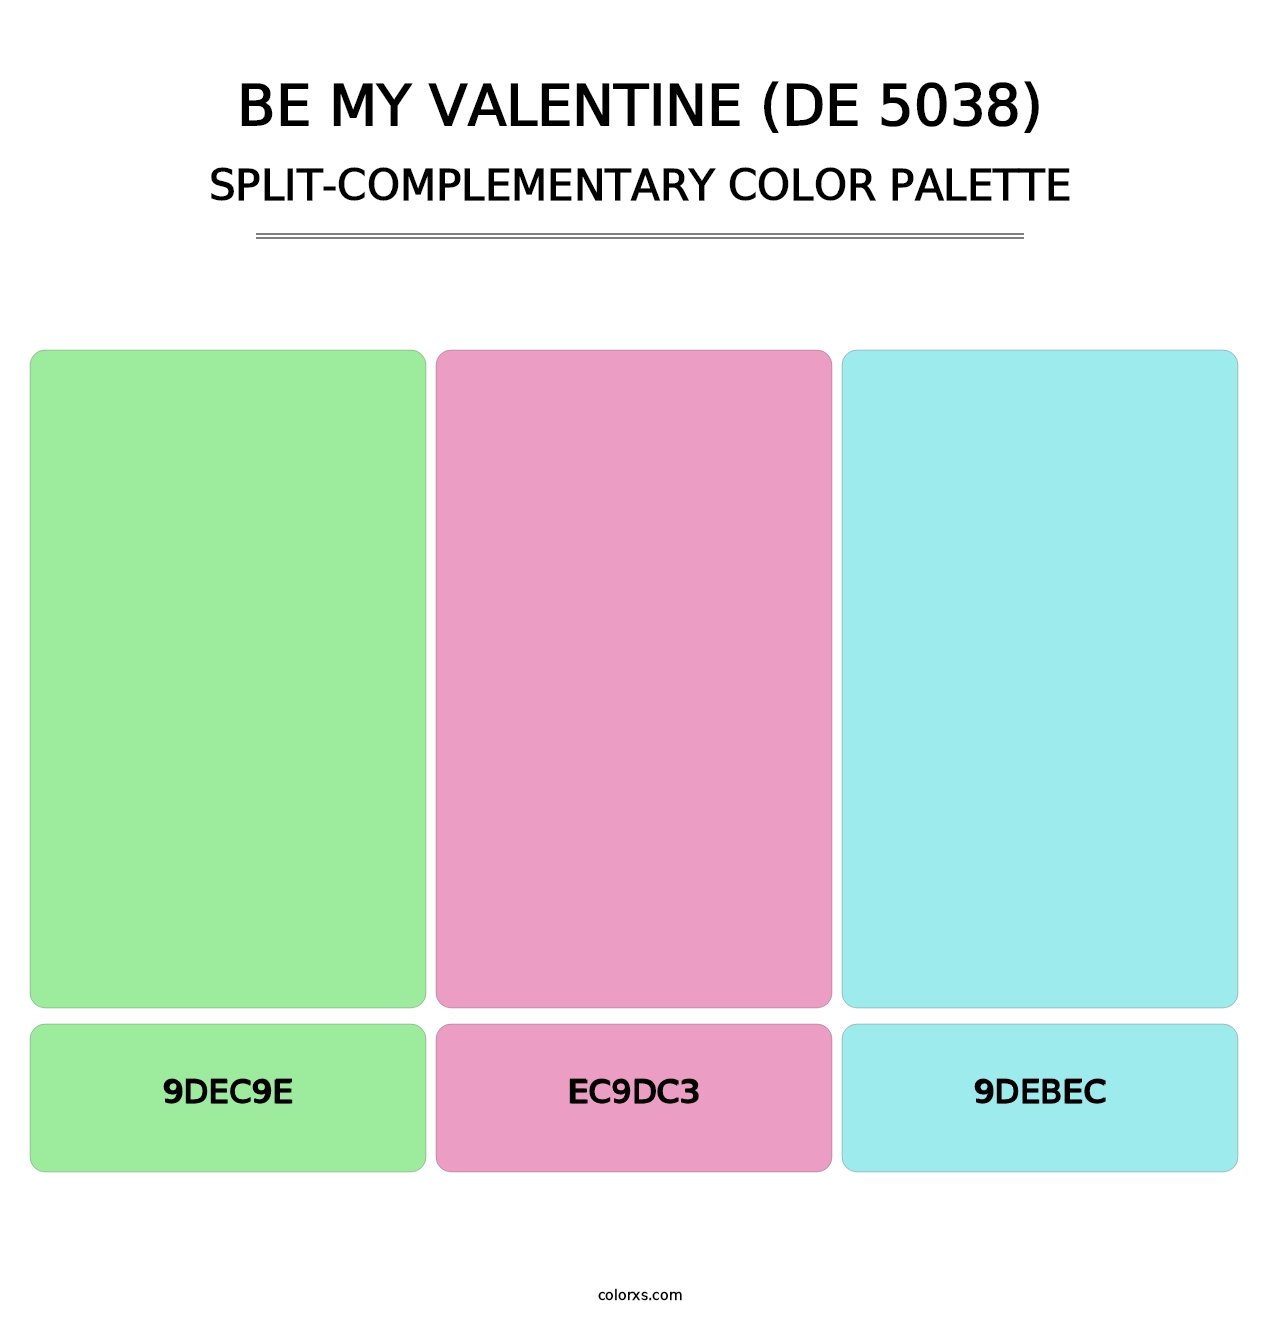 Be My Valentine (DE 5038) - Split-Complementary Color Palette